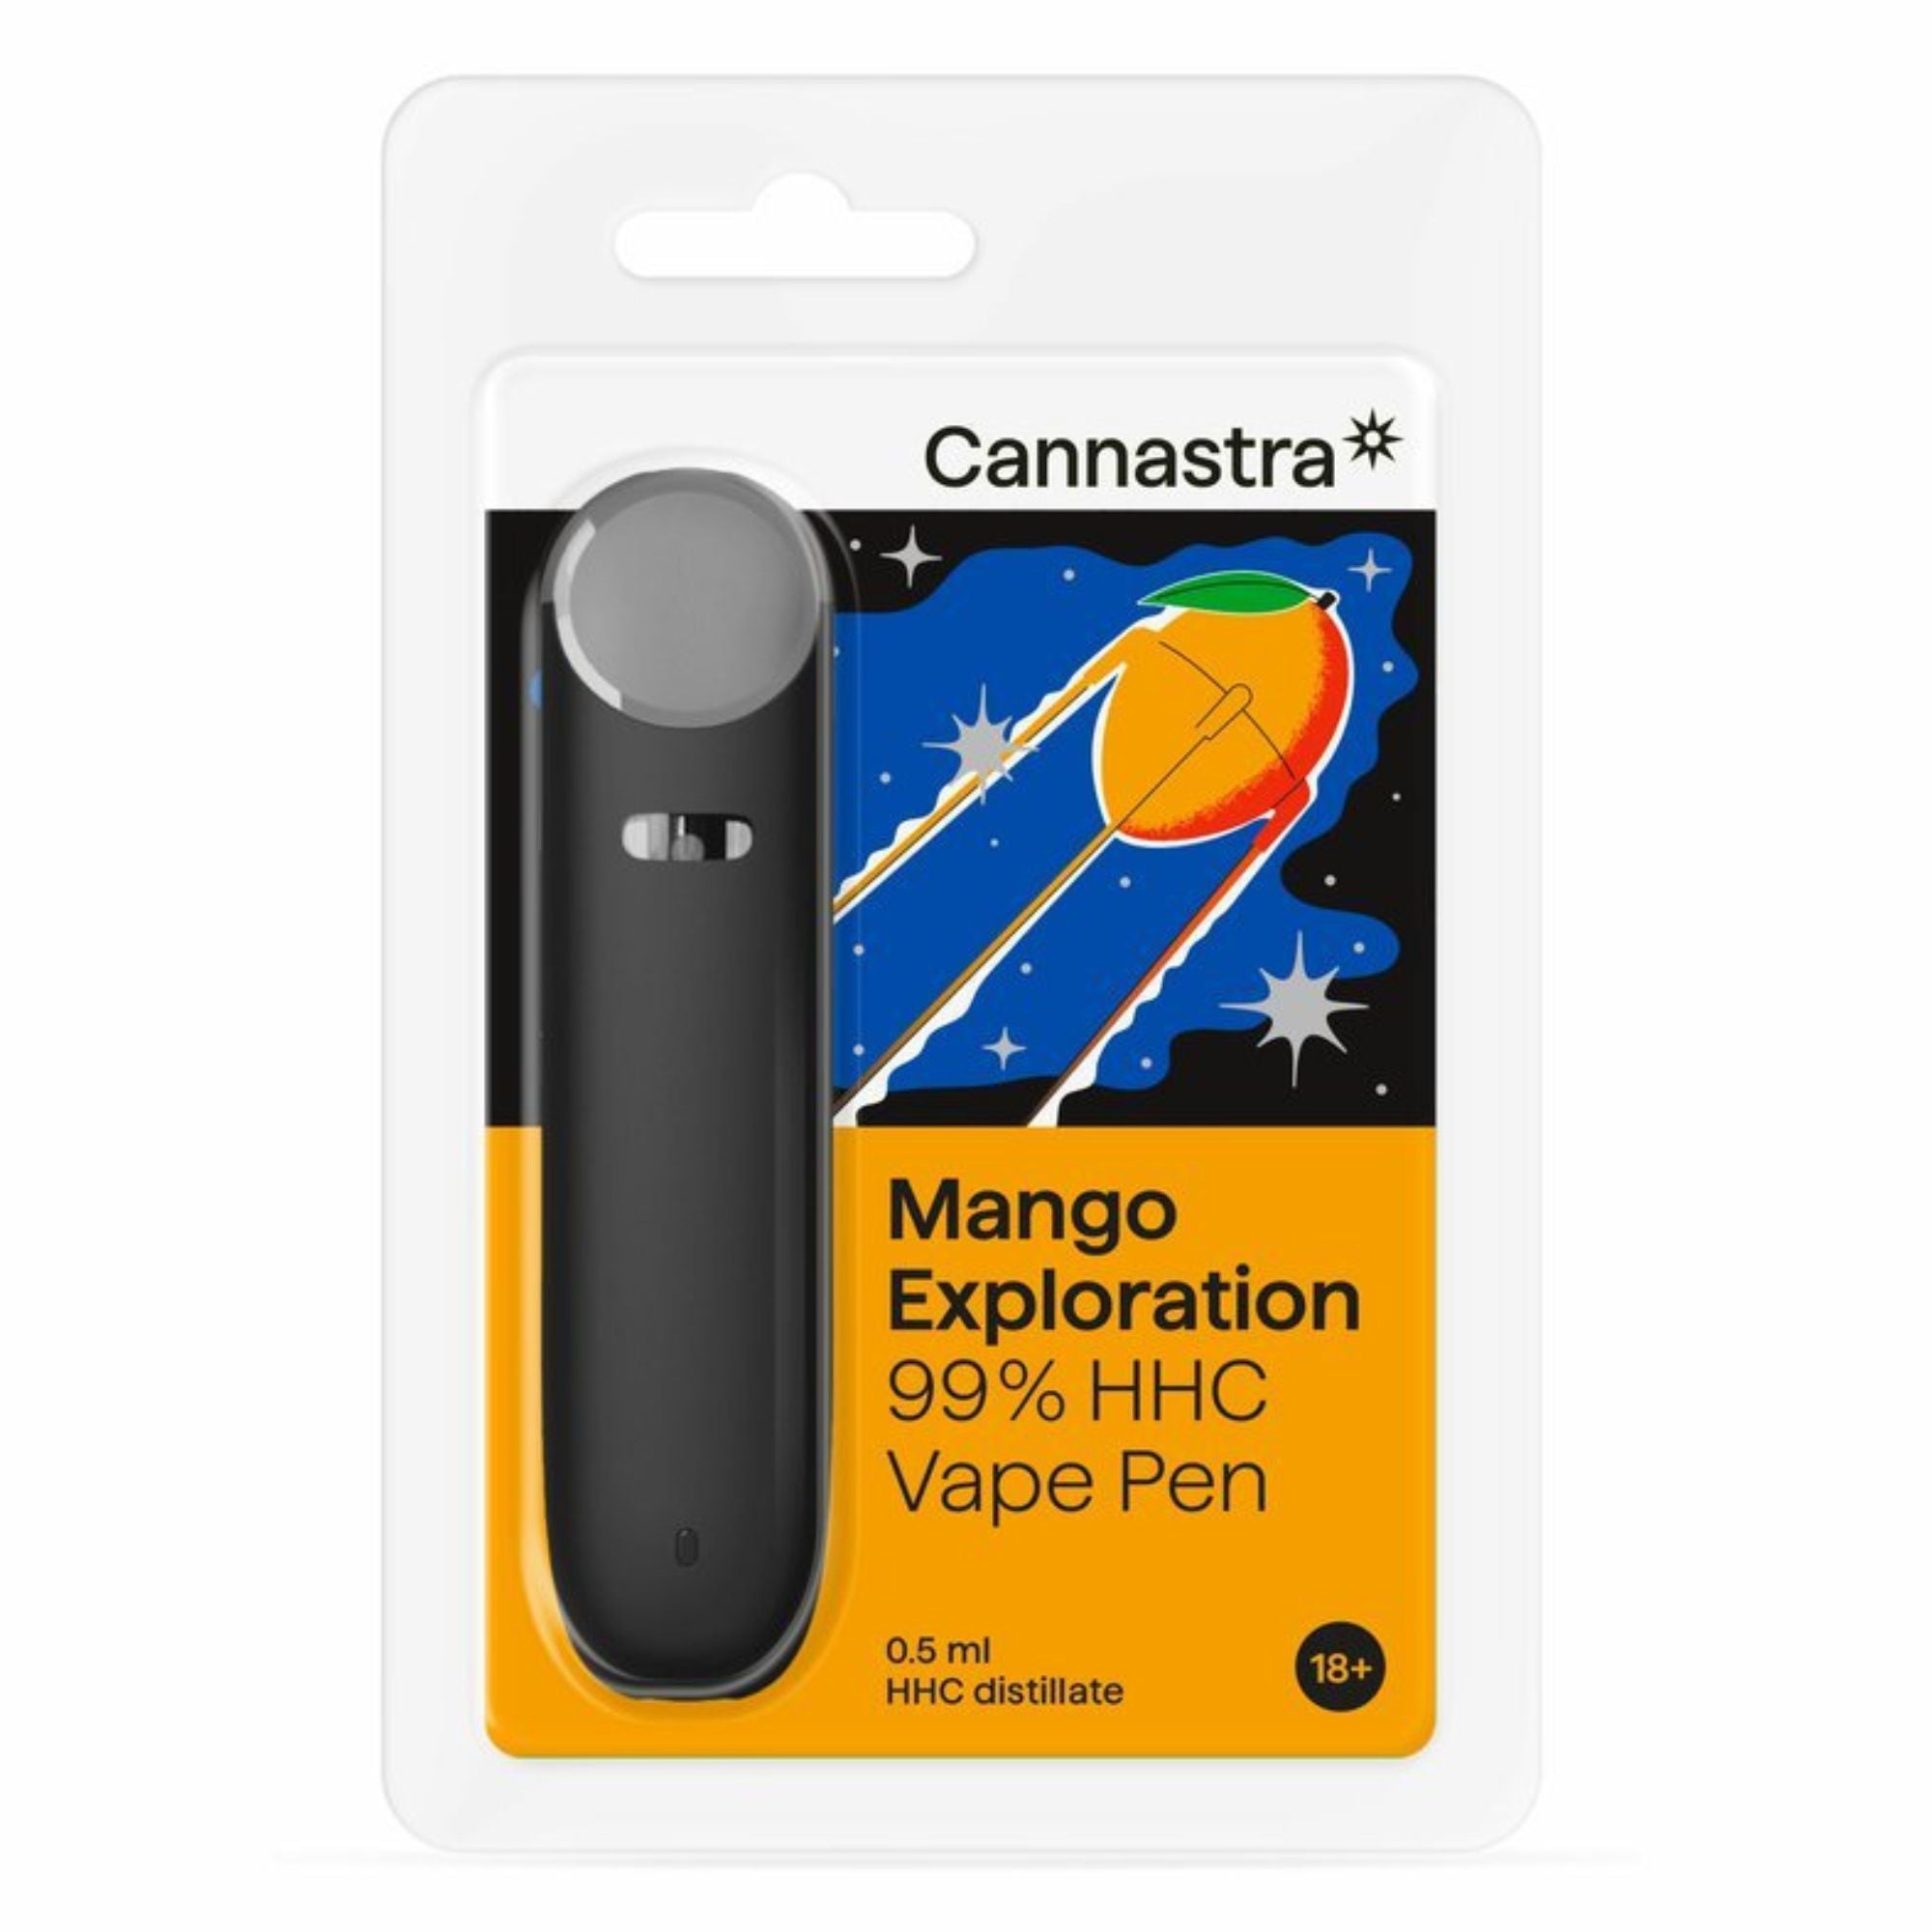 HHC Vape Pen Mango Exploration 99% cannastra